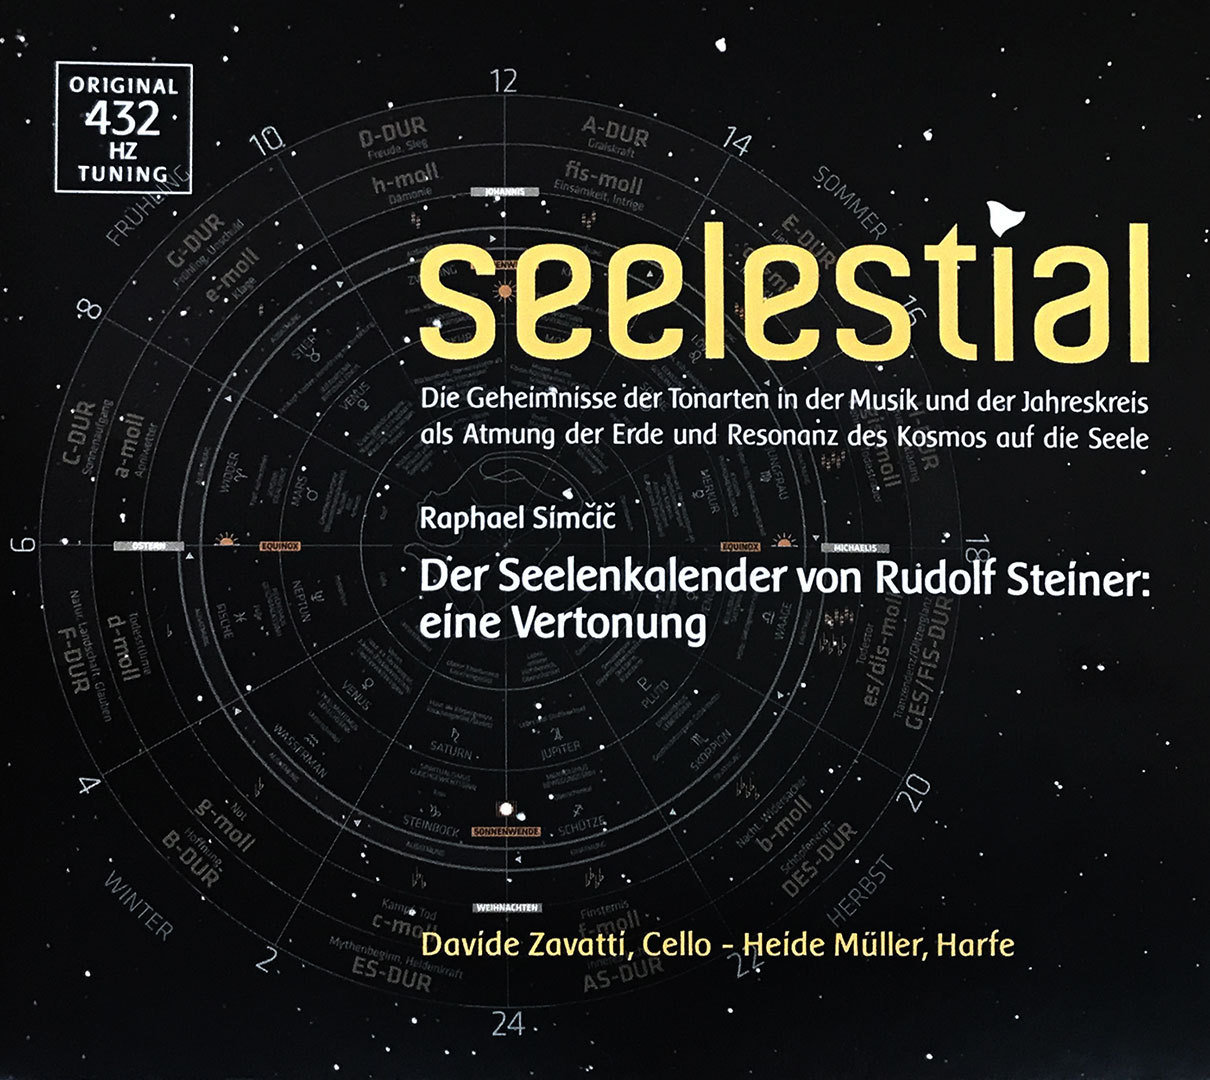 CD "seelestial"